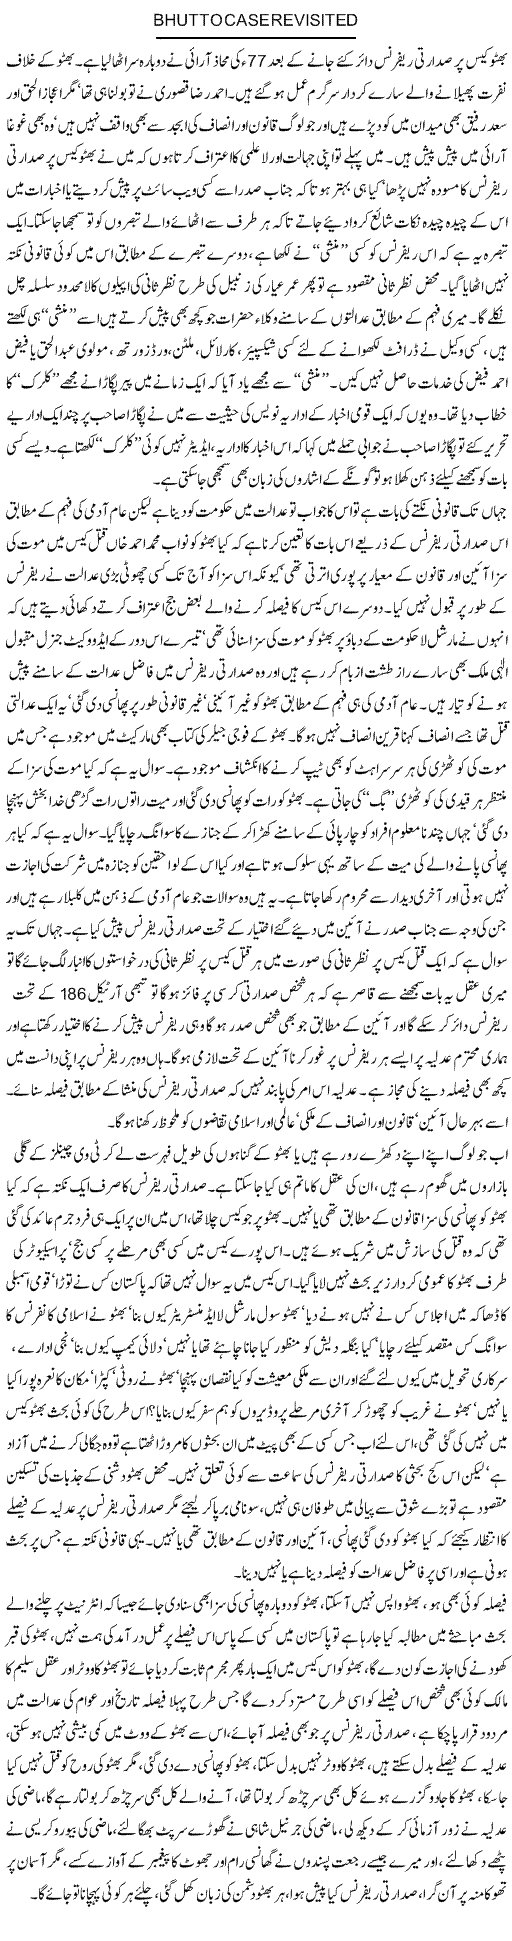 Bhutto Case Reopened Express Column Asadullah Ghalib 17 April 2011